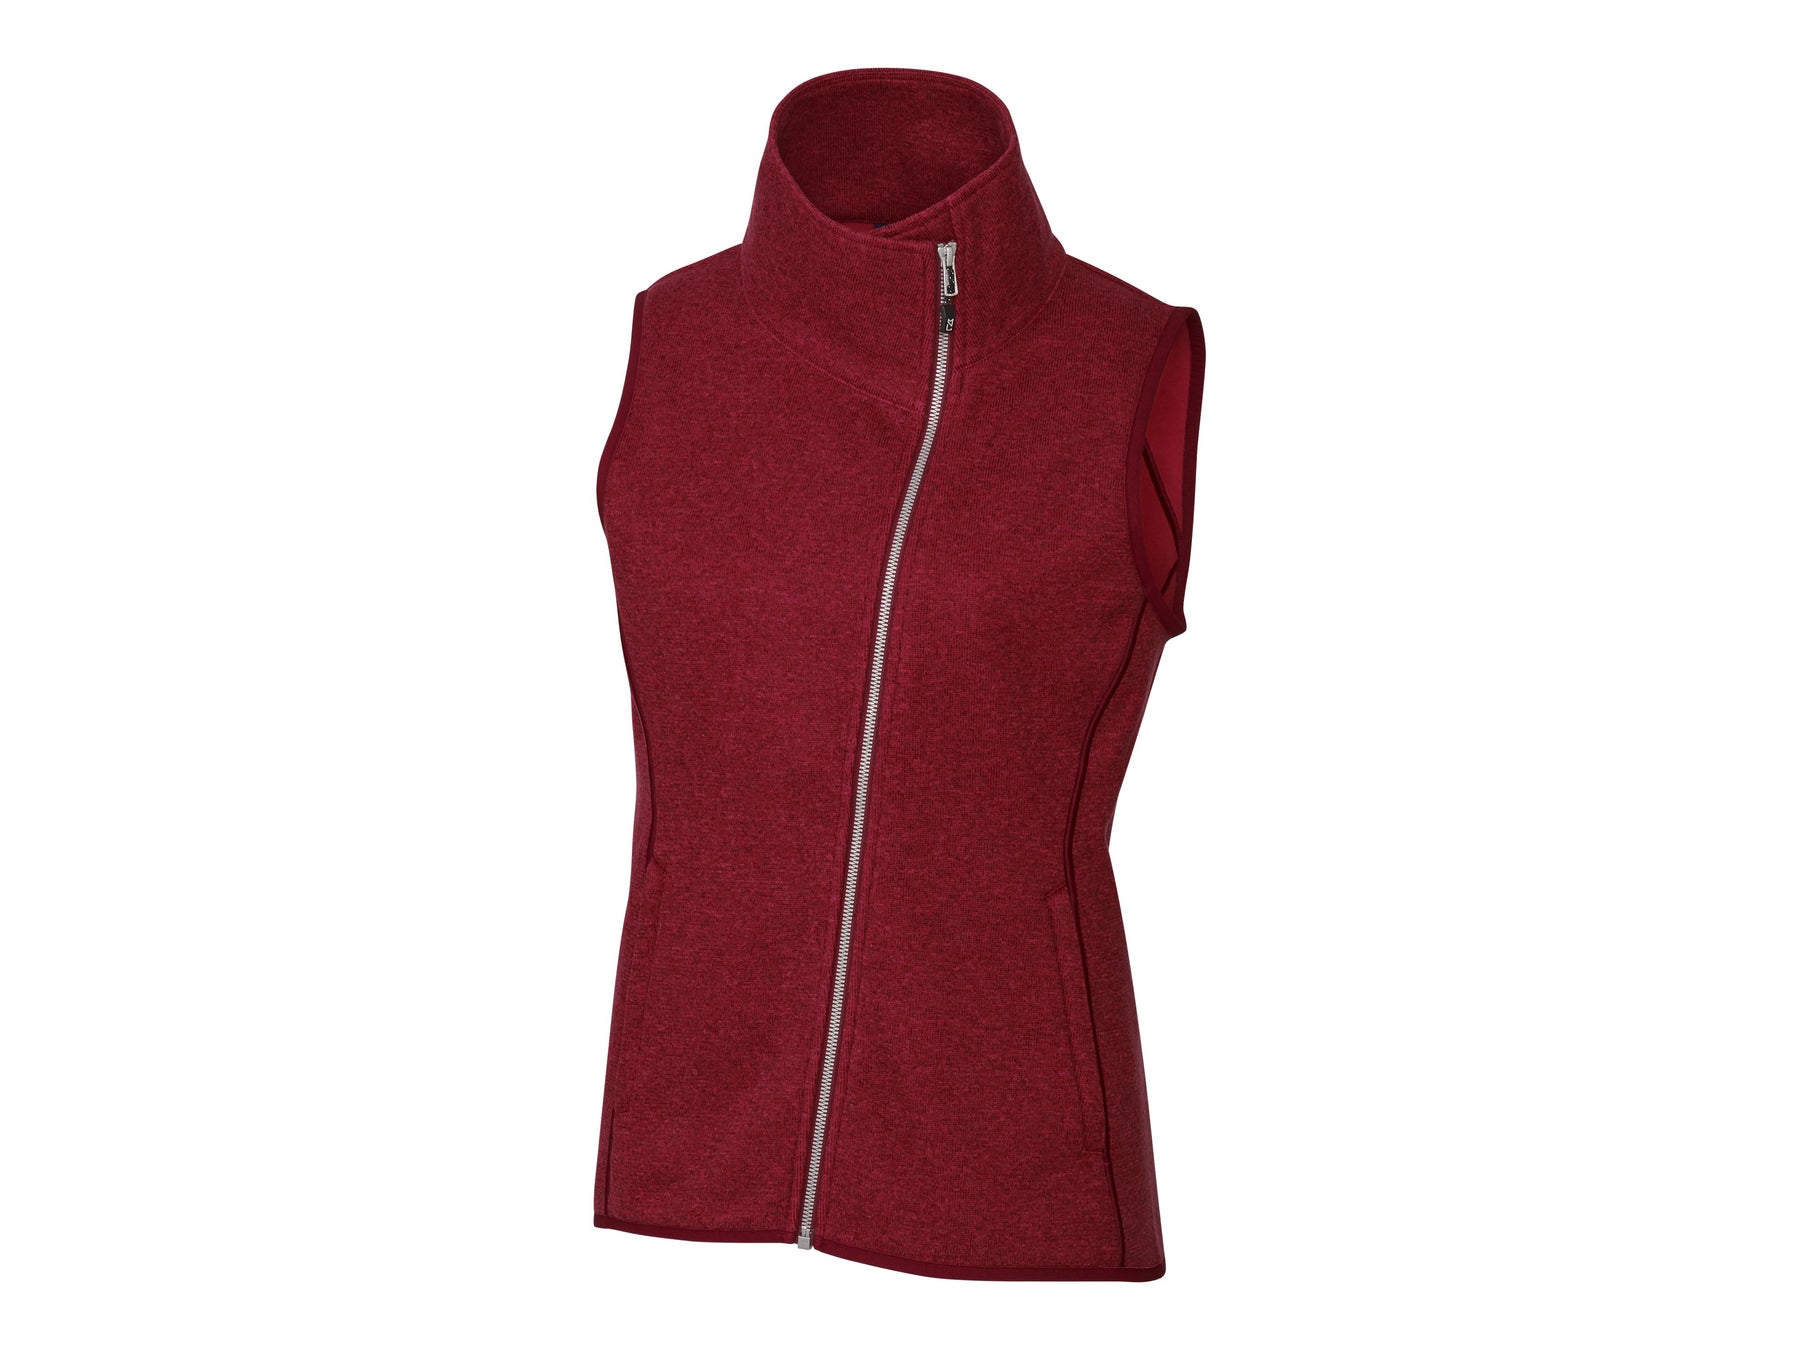 Mainsail Sweater-Knit Womens Full Zip Vest